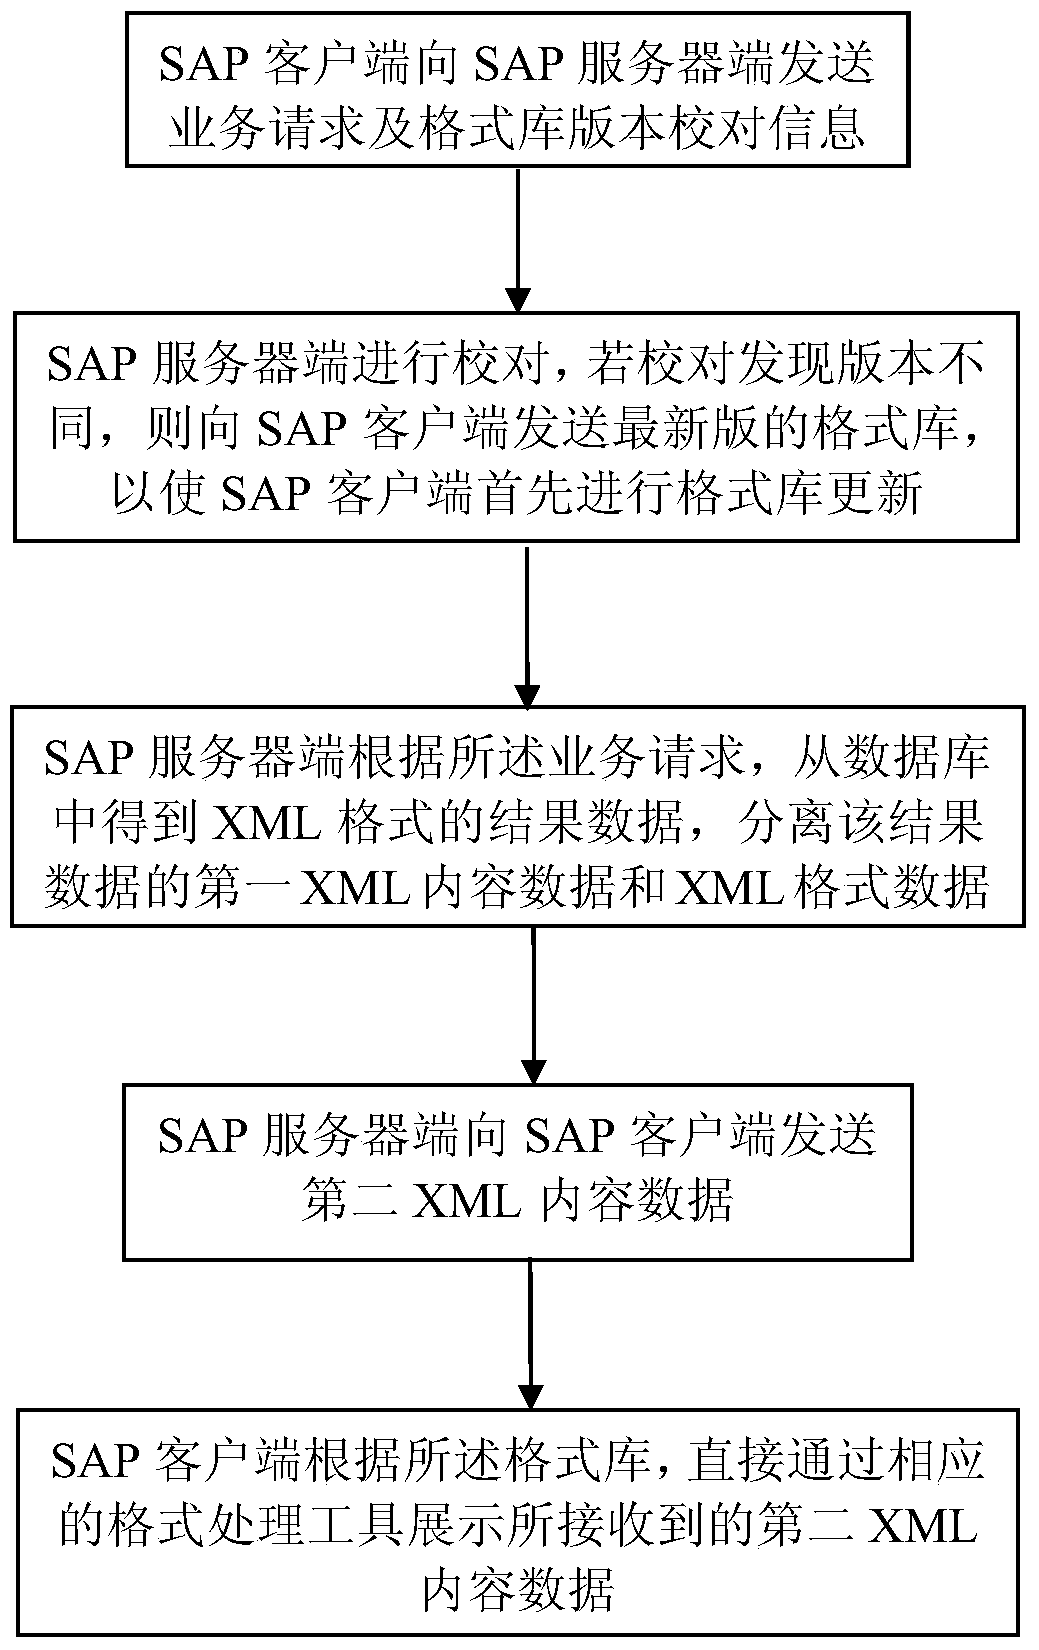 A simplified sap data transmission method based on xml